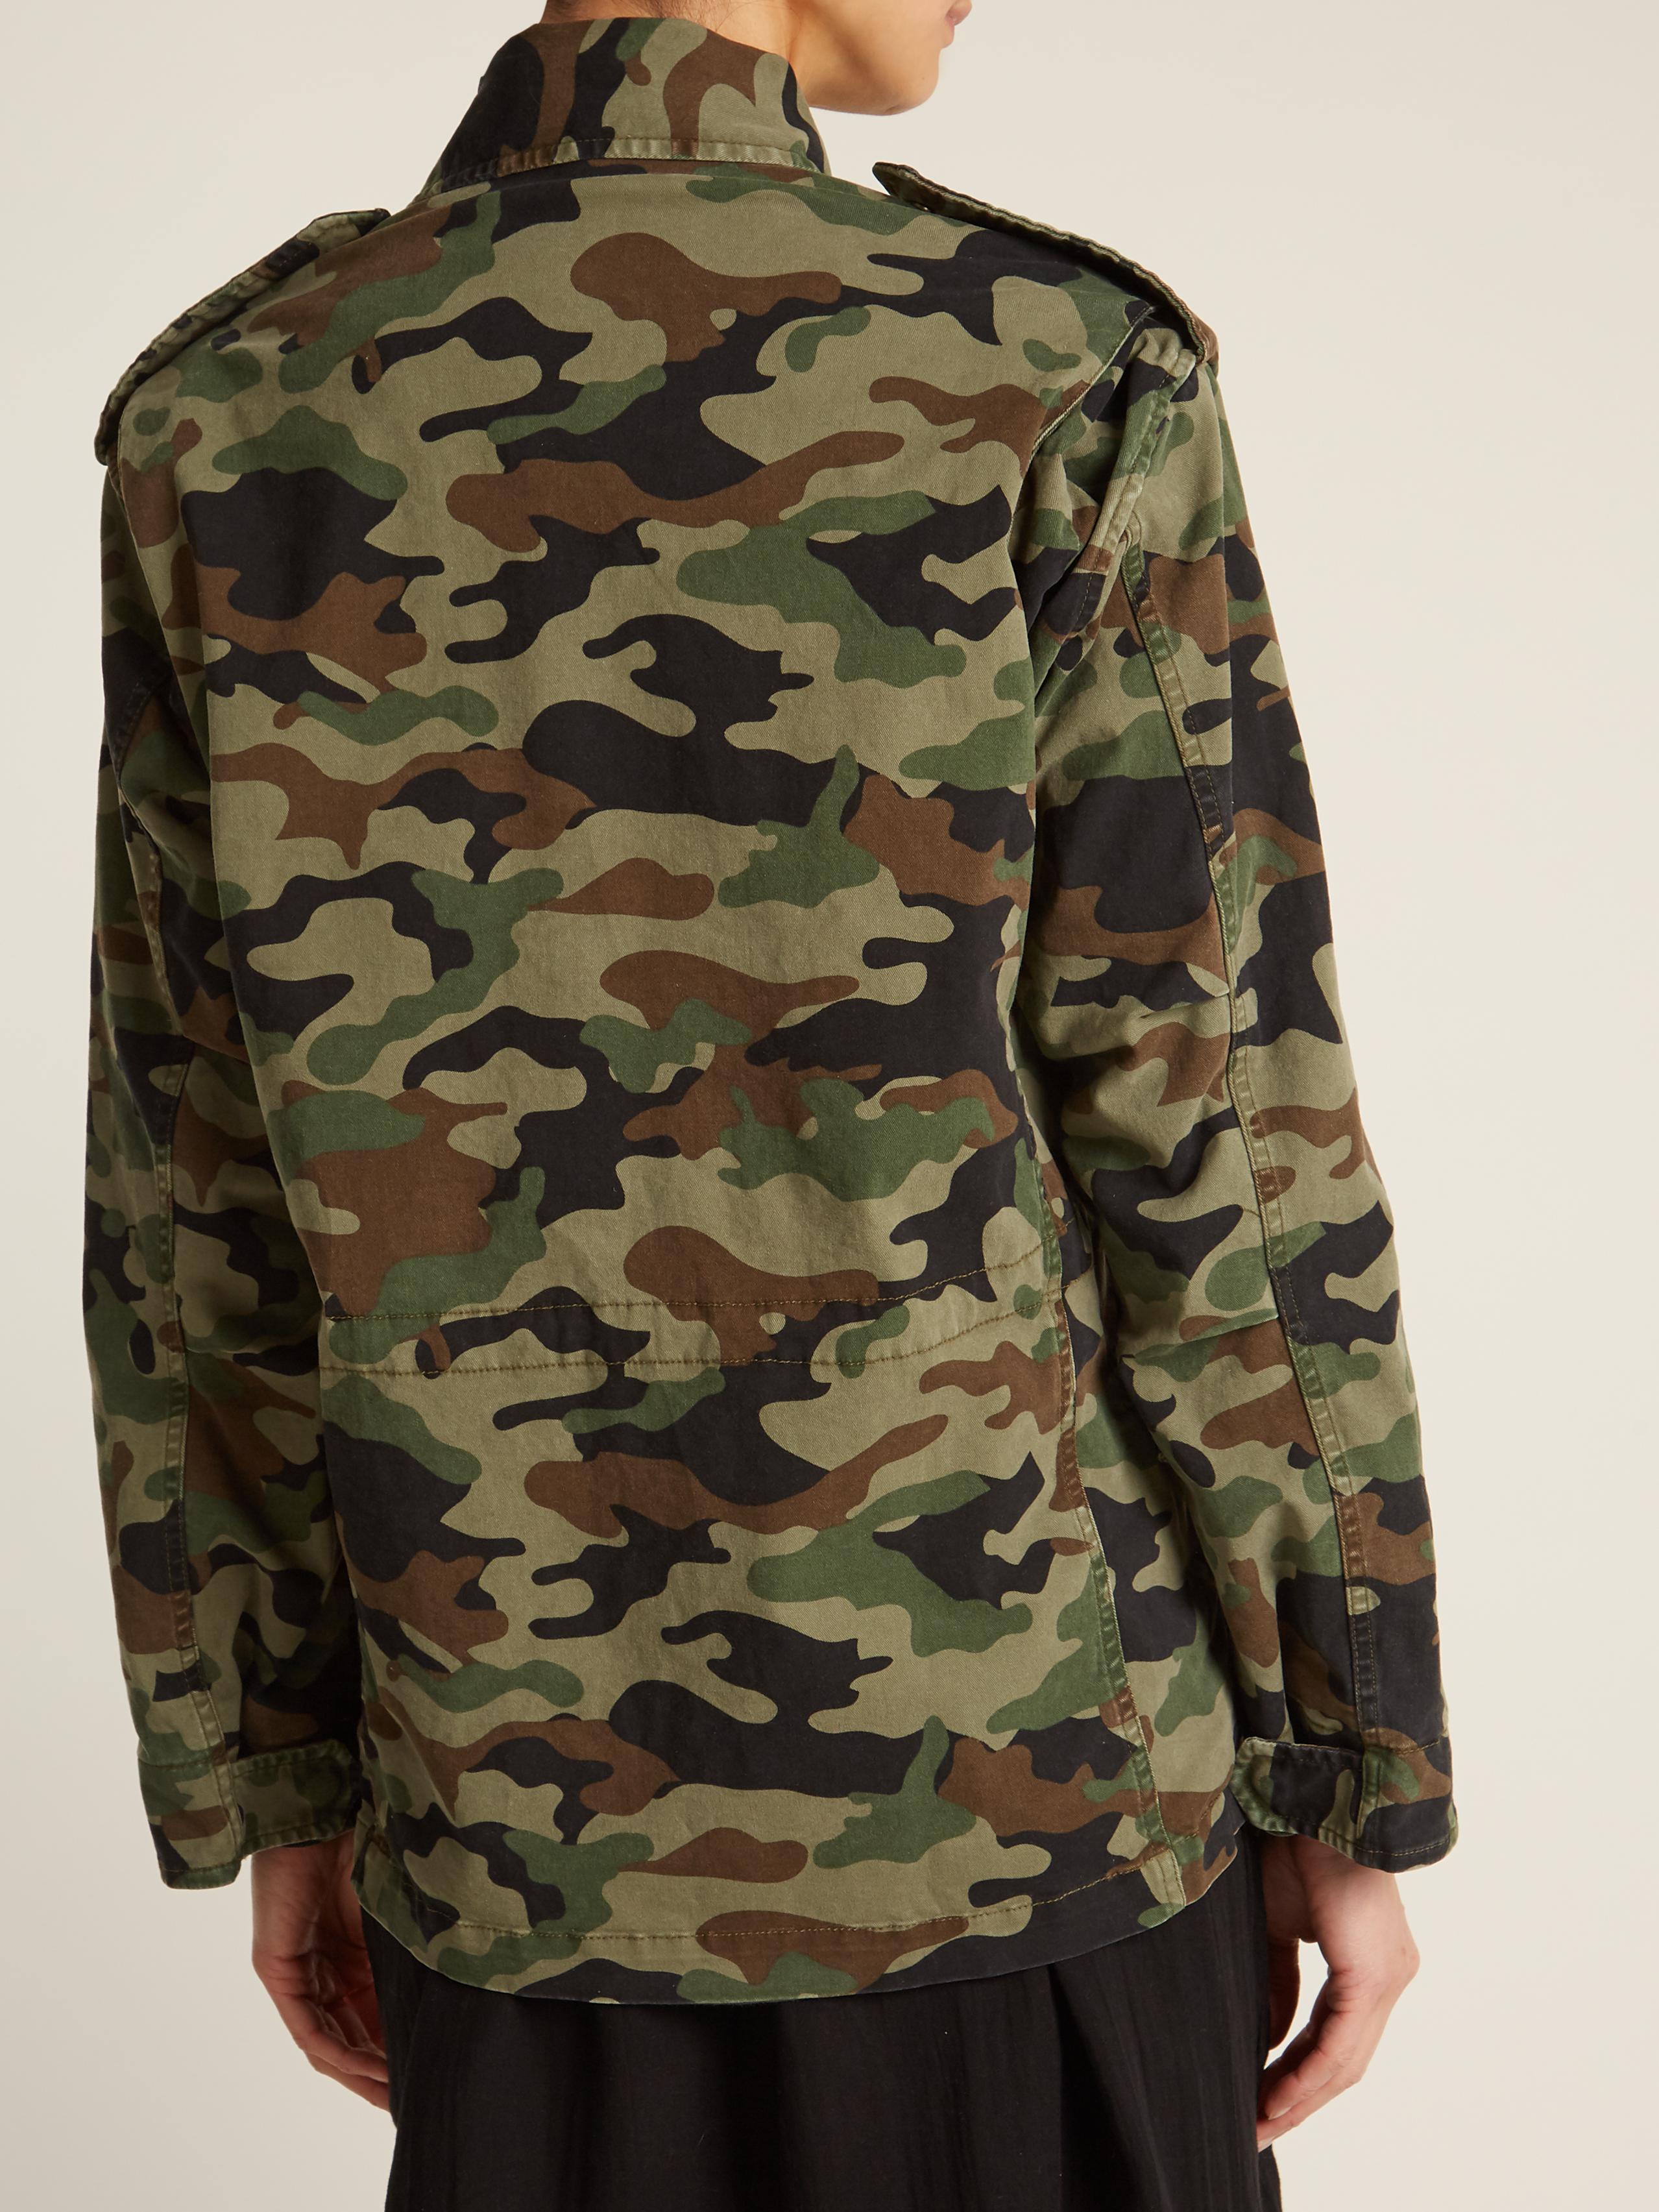 Lyst - Nili Lotan Ashton Camouflage-print Stretch-cotton Jacket in Green